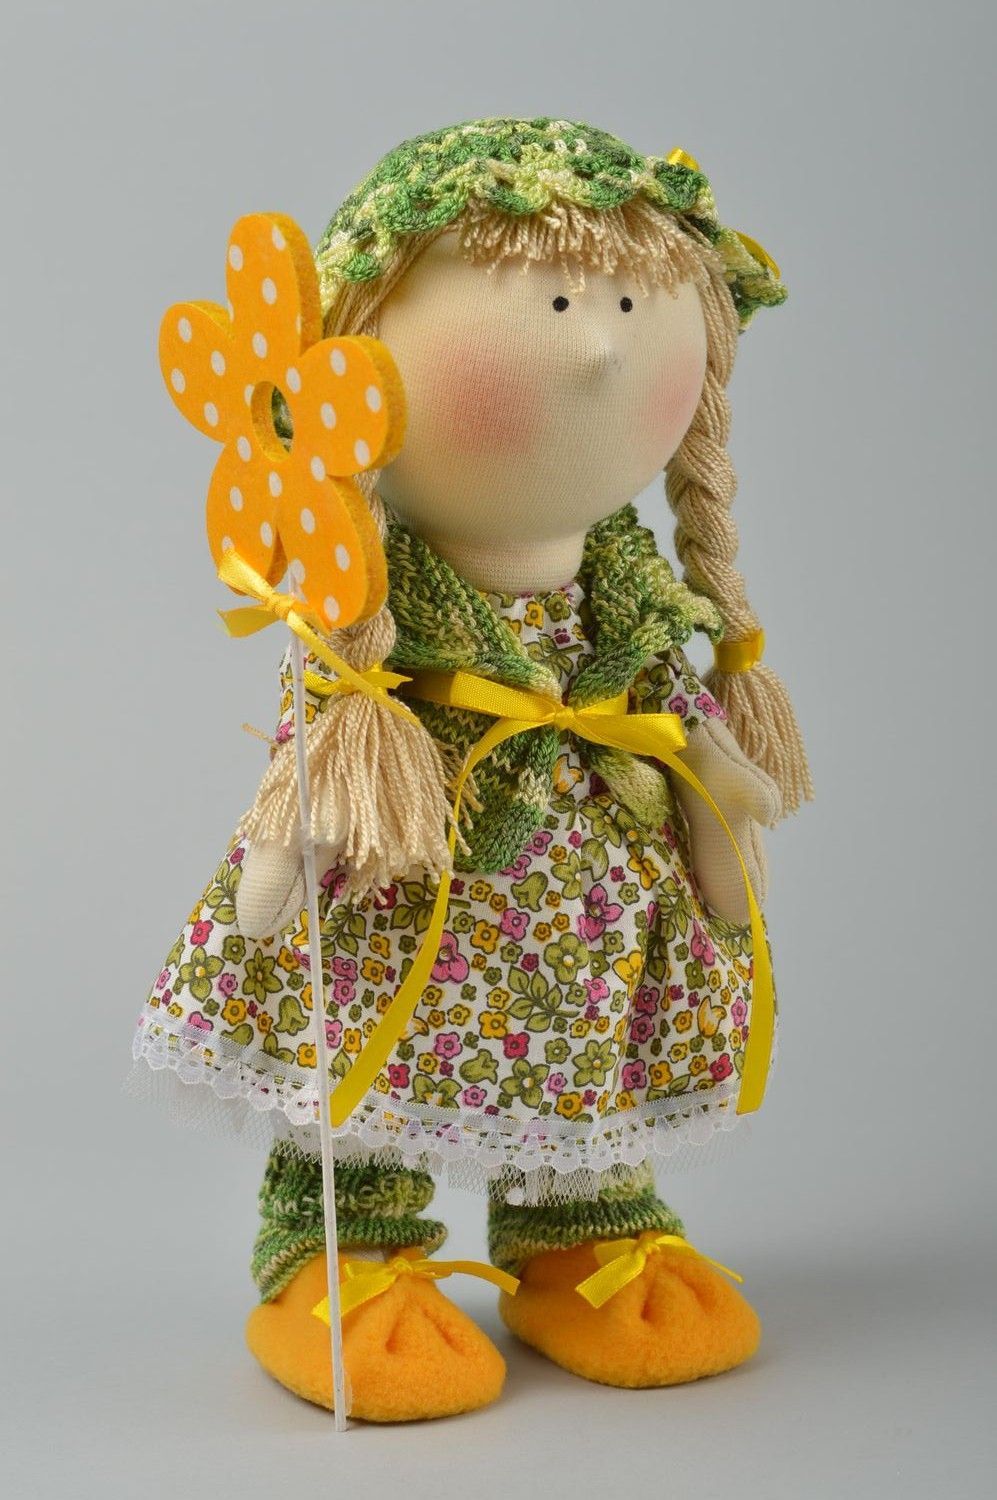 Handmade doll designer doll textile doll fabric doll gift for girl decor ideas photo 1